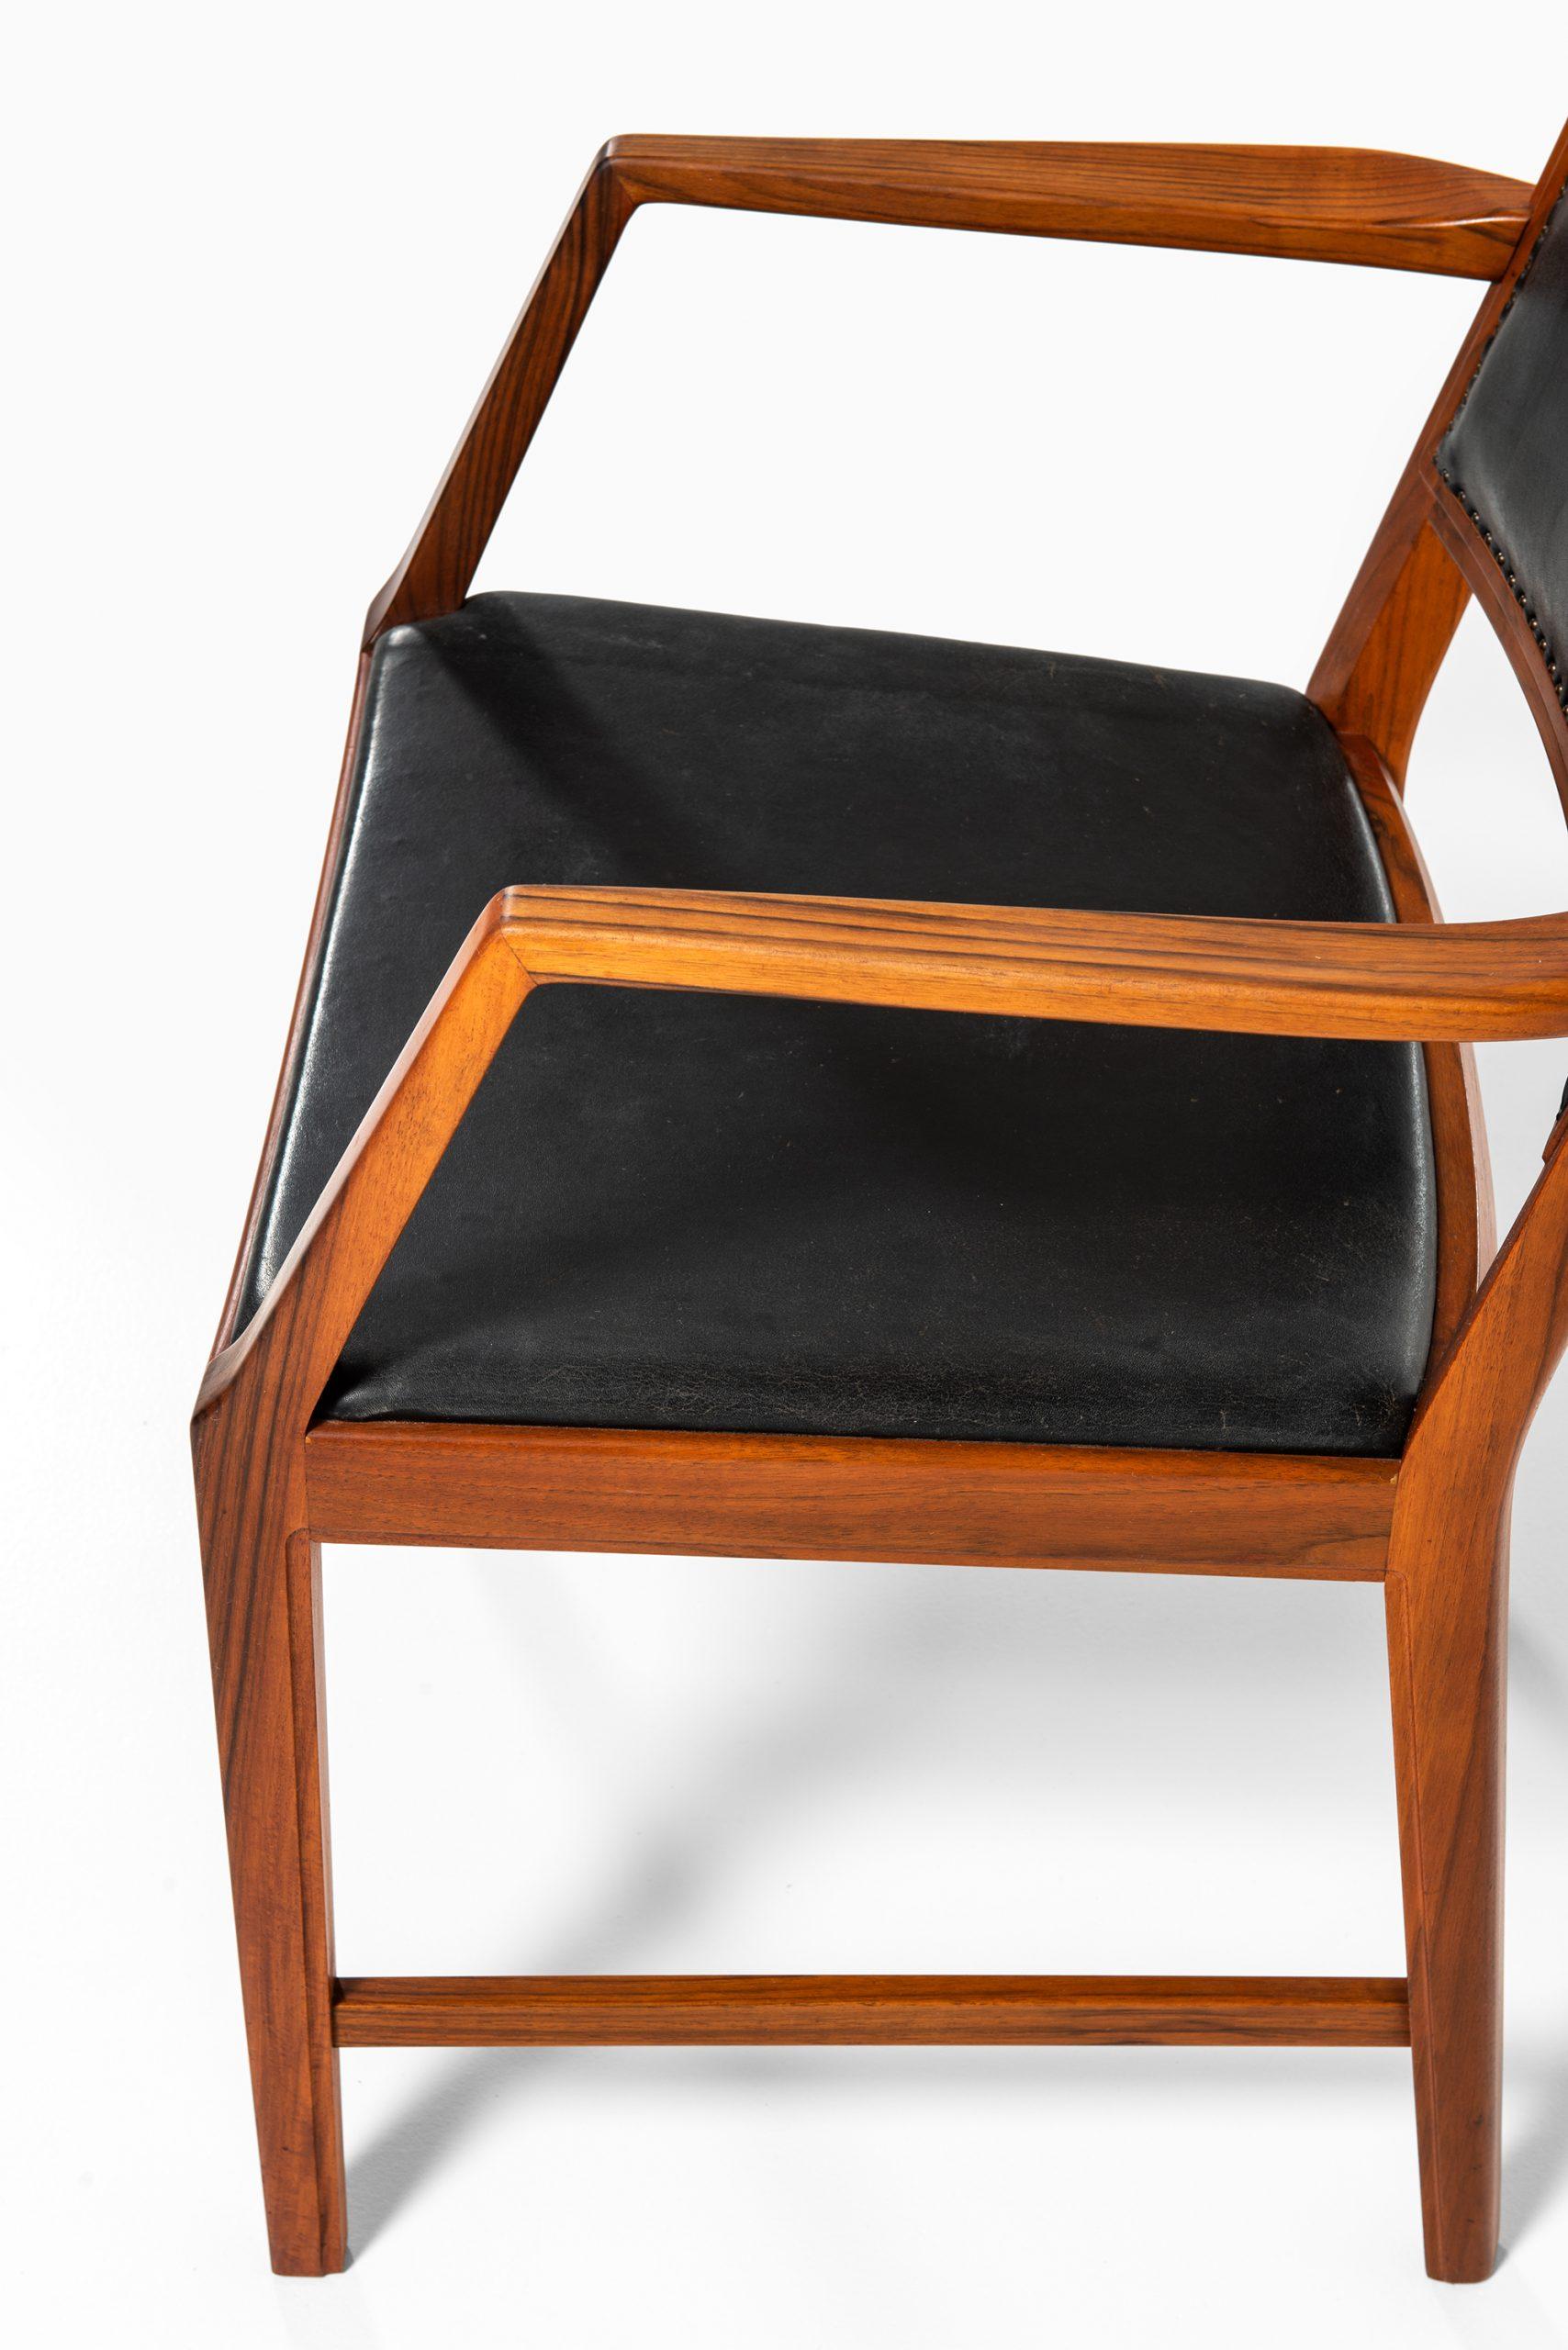 Scandinavian Modern Bertil Fridhagen Dining Chairs Model Diamant Produced by Bodafors in Sweden